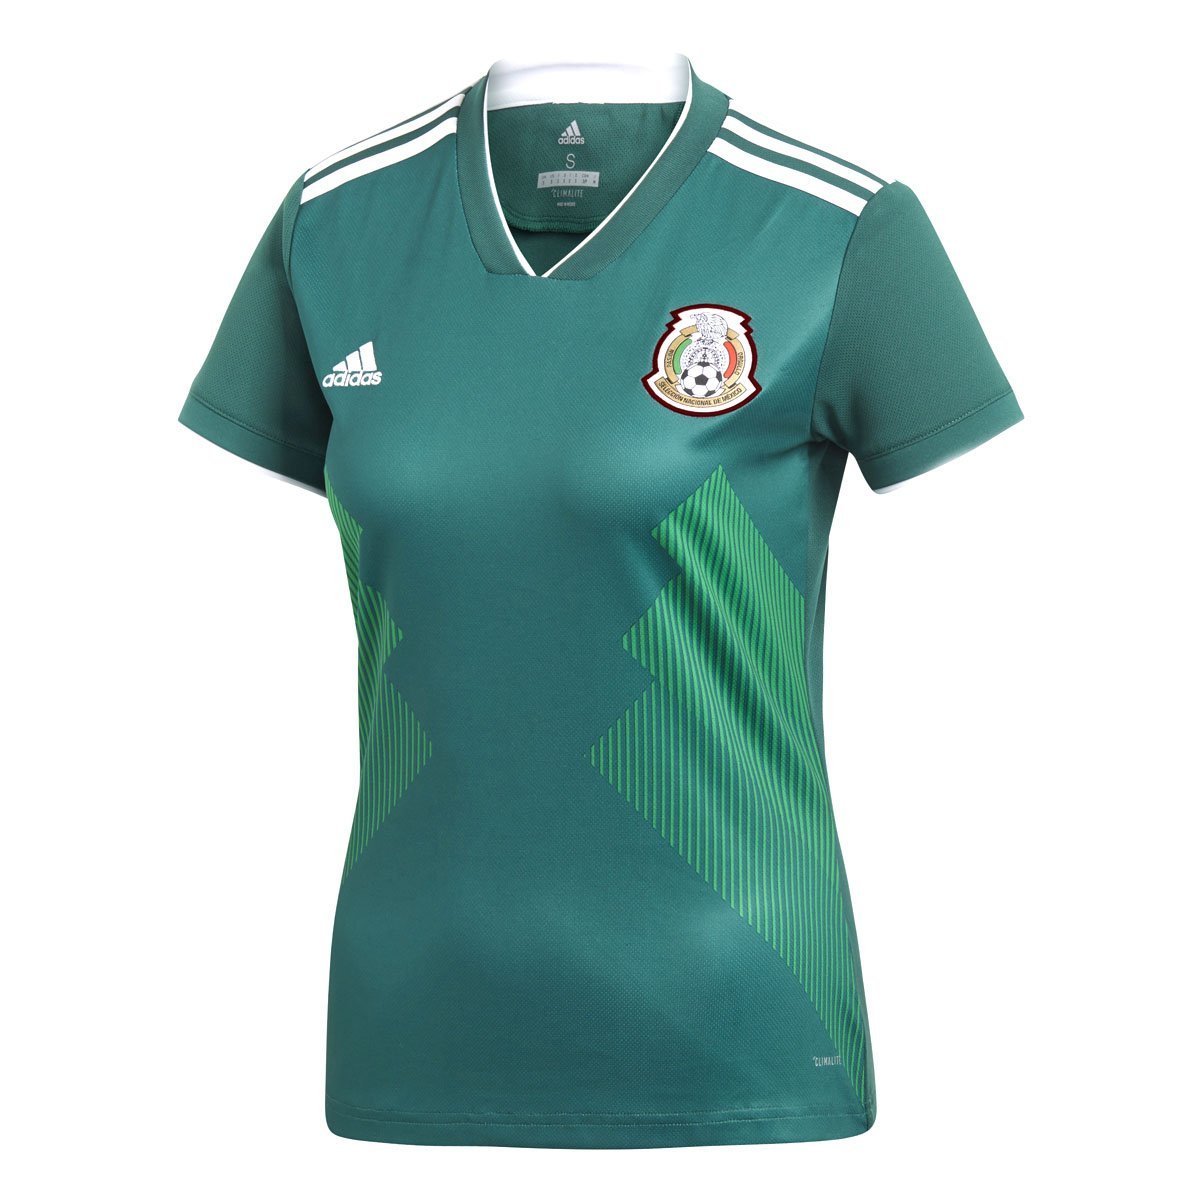 Adidas Jersey-Playera Rusia 2018 / Local Mexico - Dama